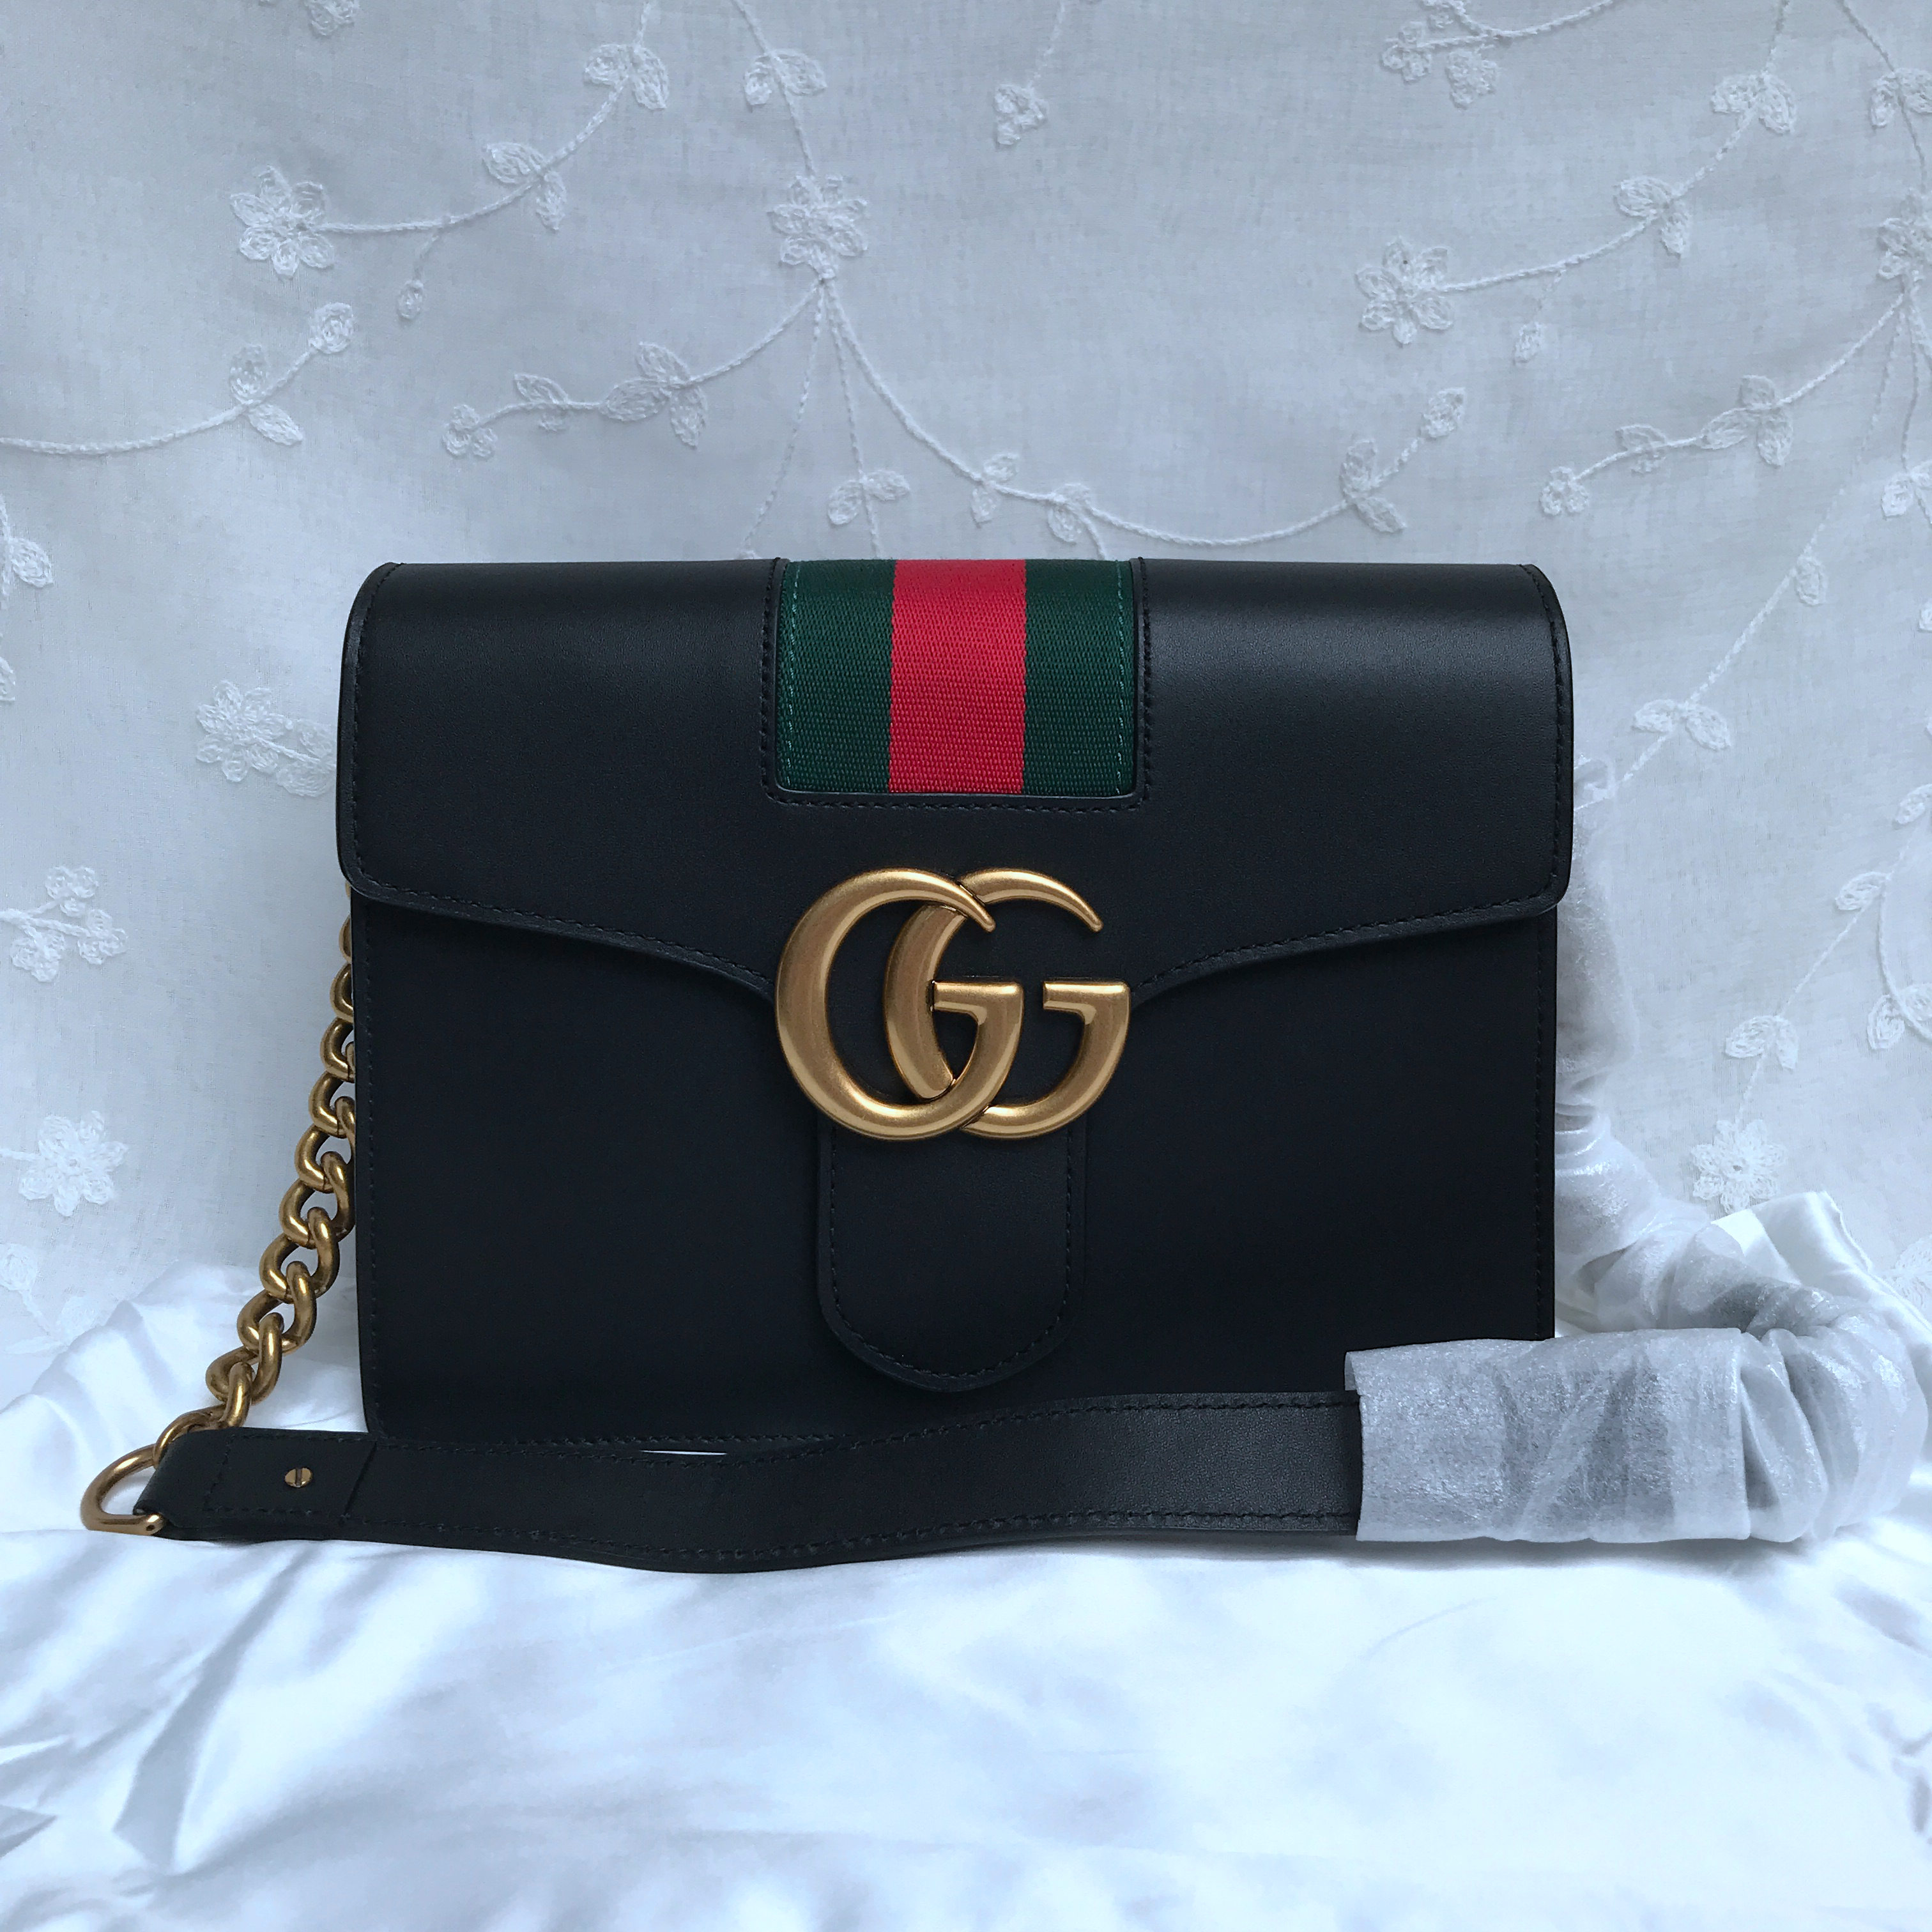 US$ 255.00 - Gucci Marmont shoulder bag 476468 - www.insluxy.com